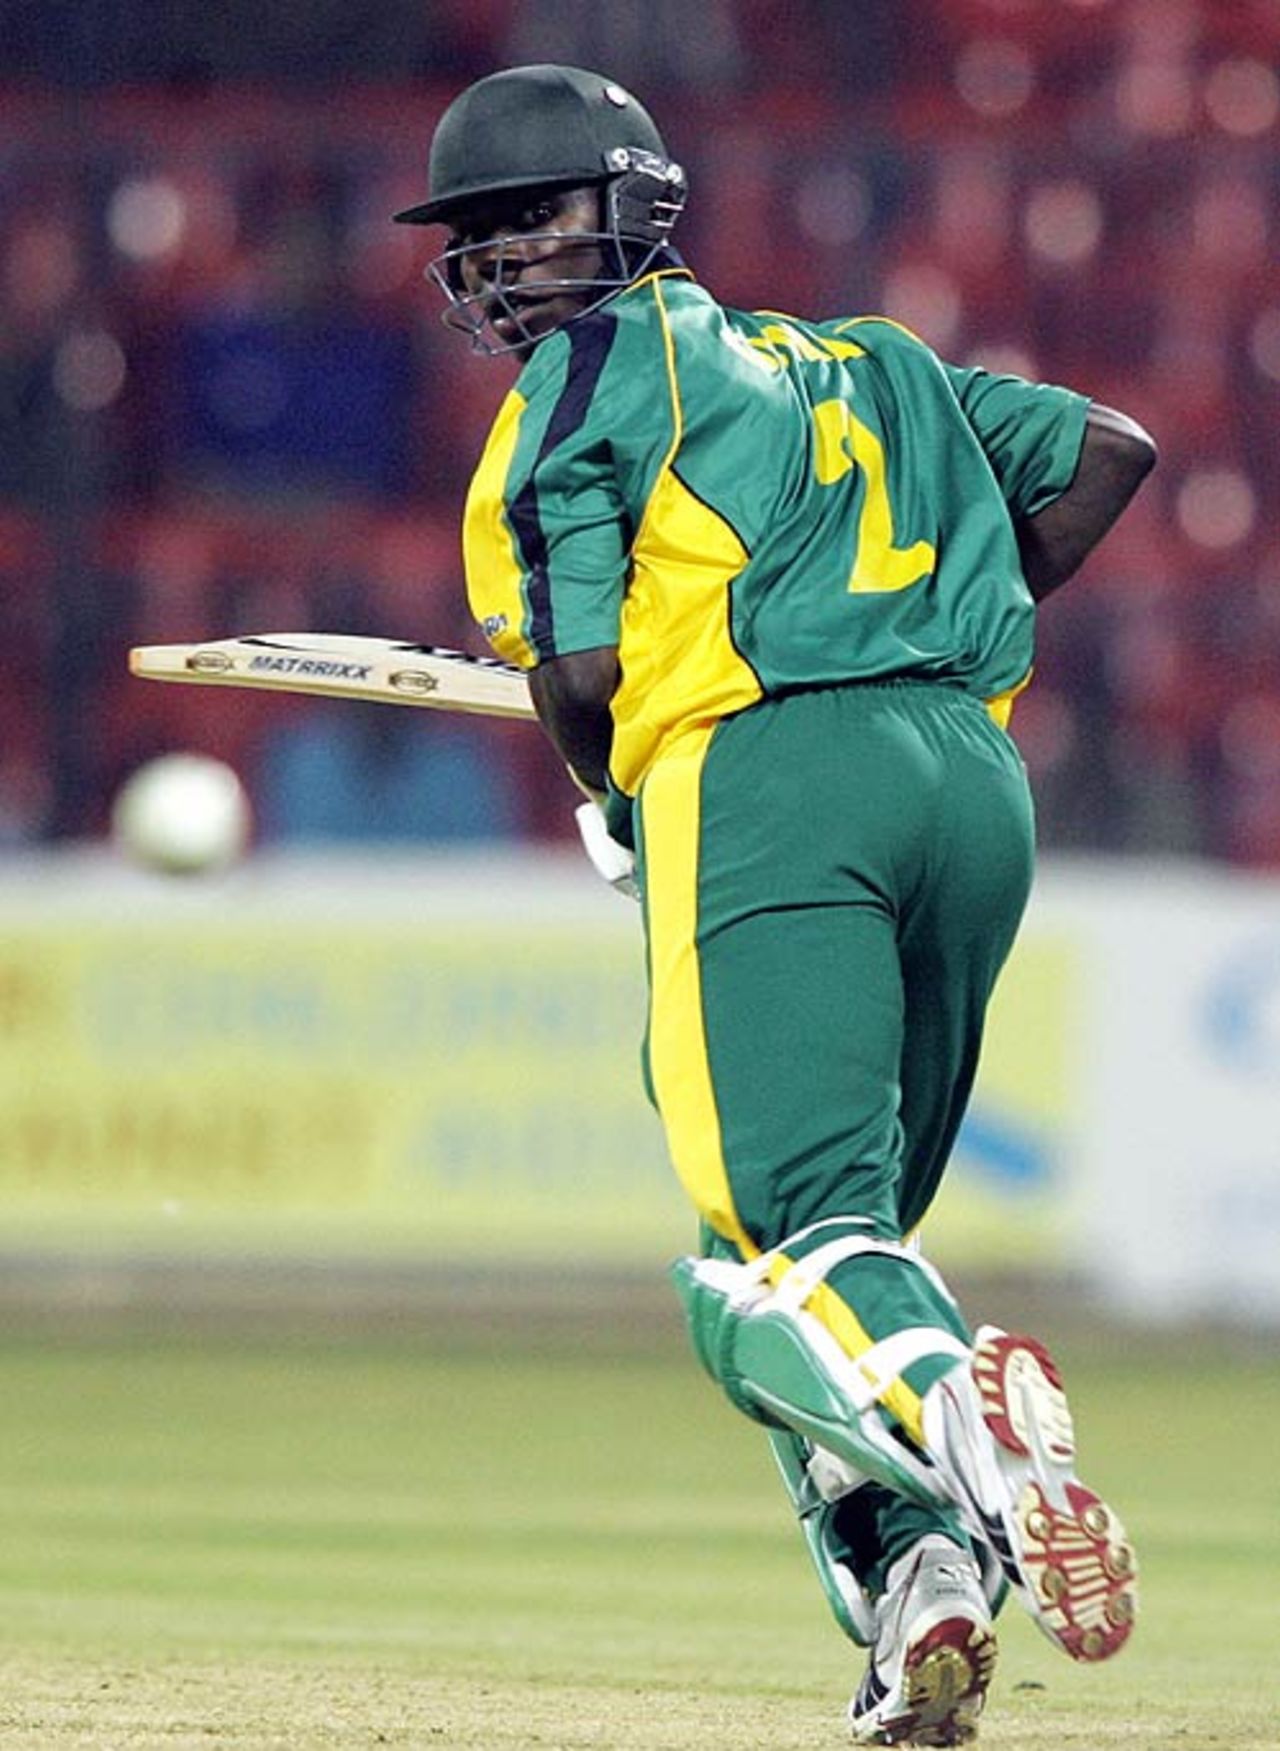 Maurice Ouma flicks one away to the fine-leg fence, Asia XI v Africa XI, Twenty20, Bangalore, June 5, 2007